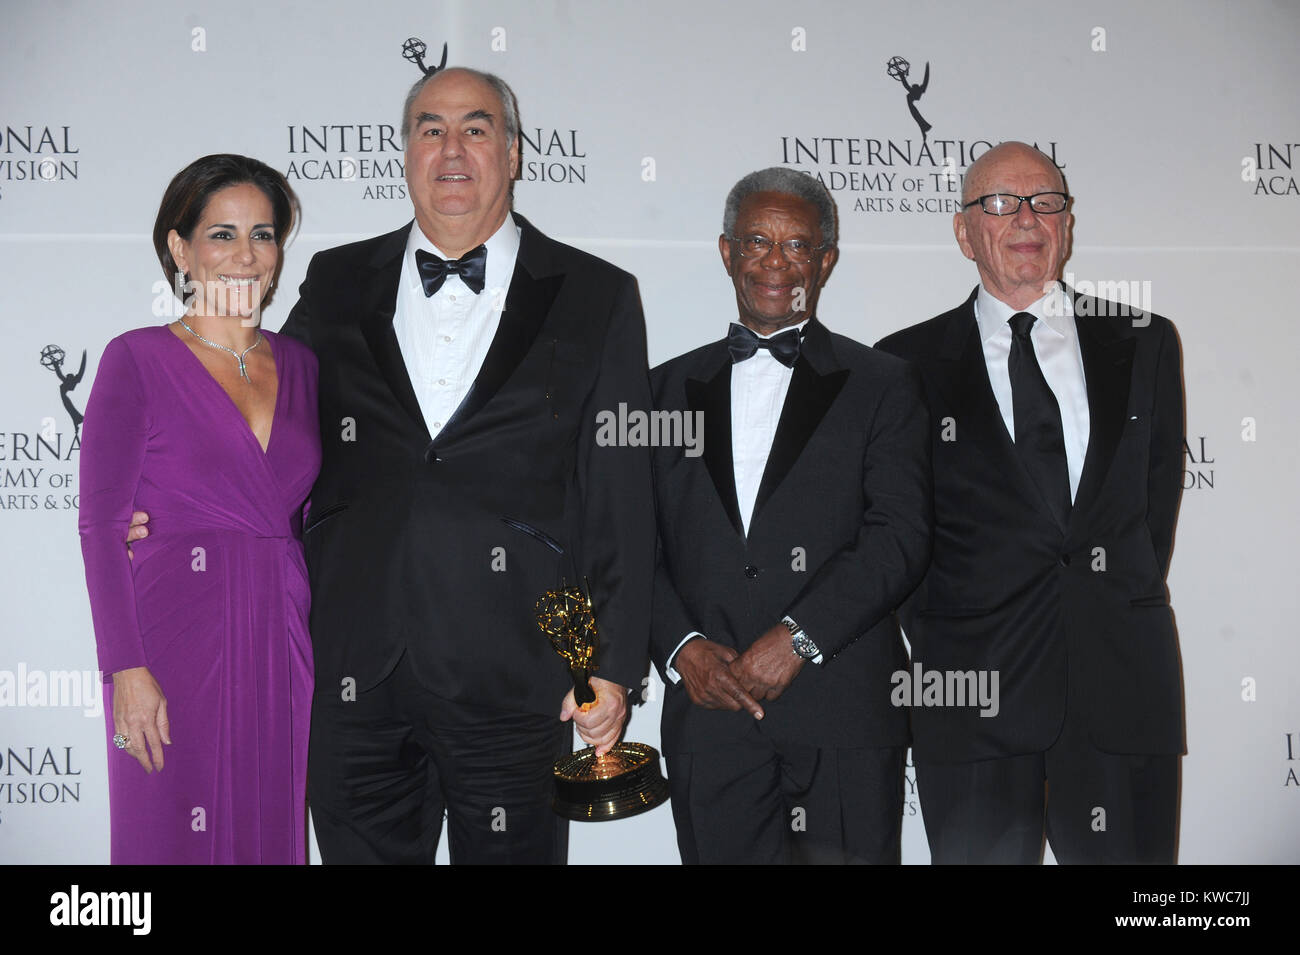 NEW YORK, NY - NOVEMBER 24: Gloria Pires, Globo Roberto, Irineu Marinho,  Milton Goncalves, R attends the 2014 International Academy Of Television  Arts & Sciences Awards at the New York Hilton on